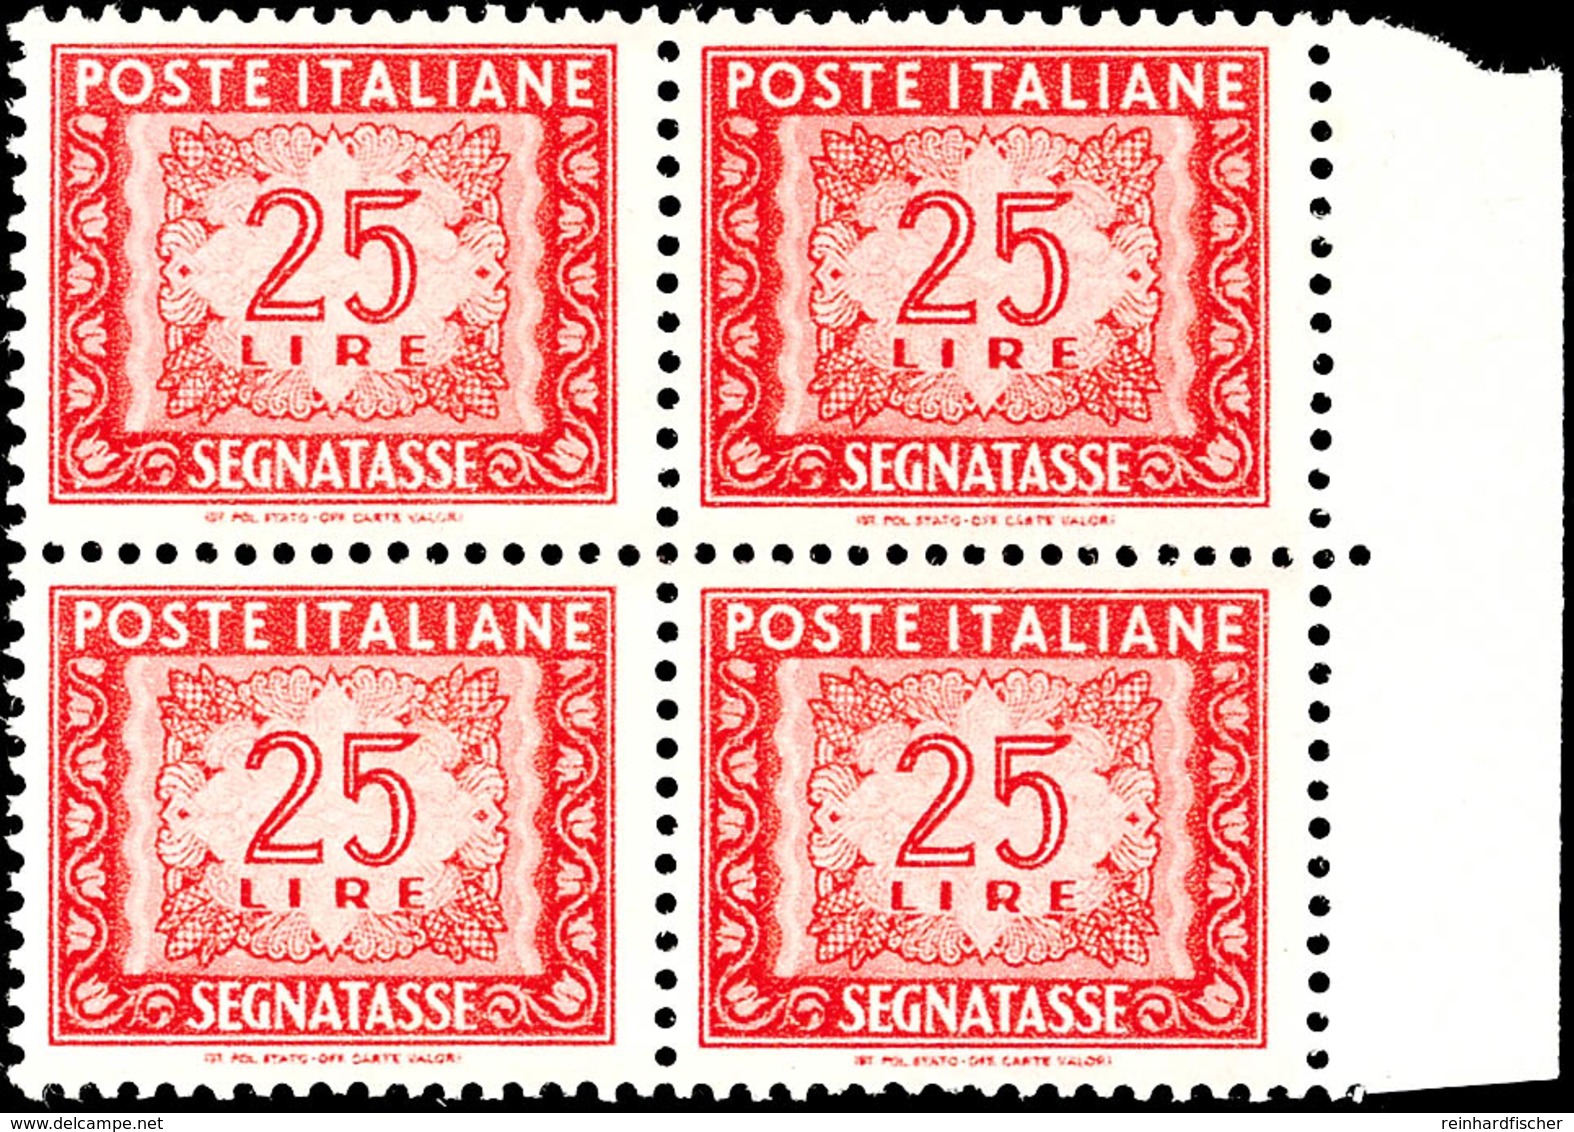 25 Lire Rot, Portomarke, Viererblock Vom Rechten Bogenrand, Tadellos Postfrisch, Mi. 600.-, Katalog: 84(4) ** - Unclassified